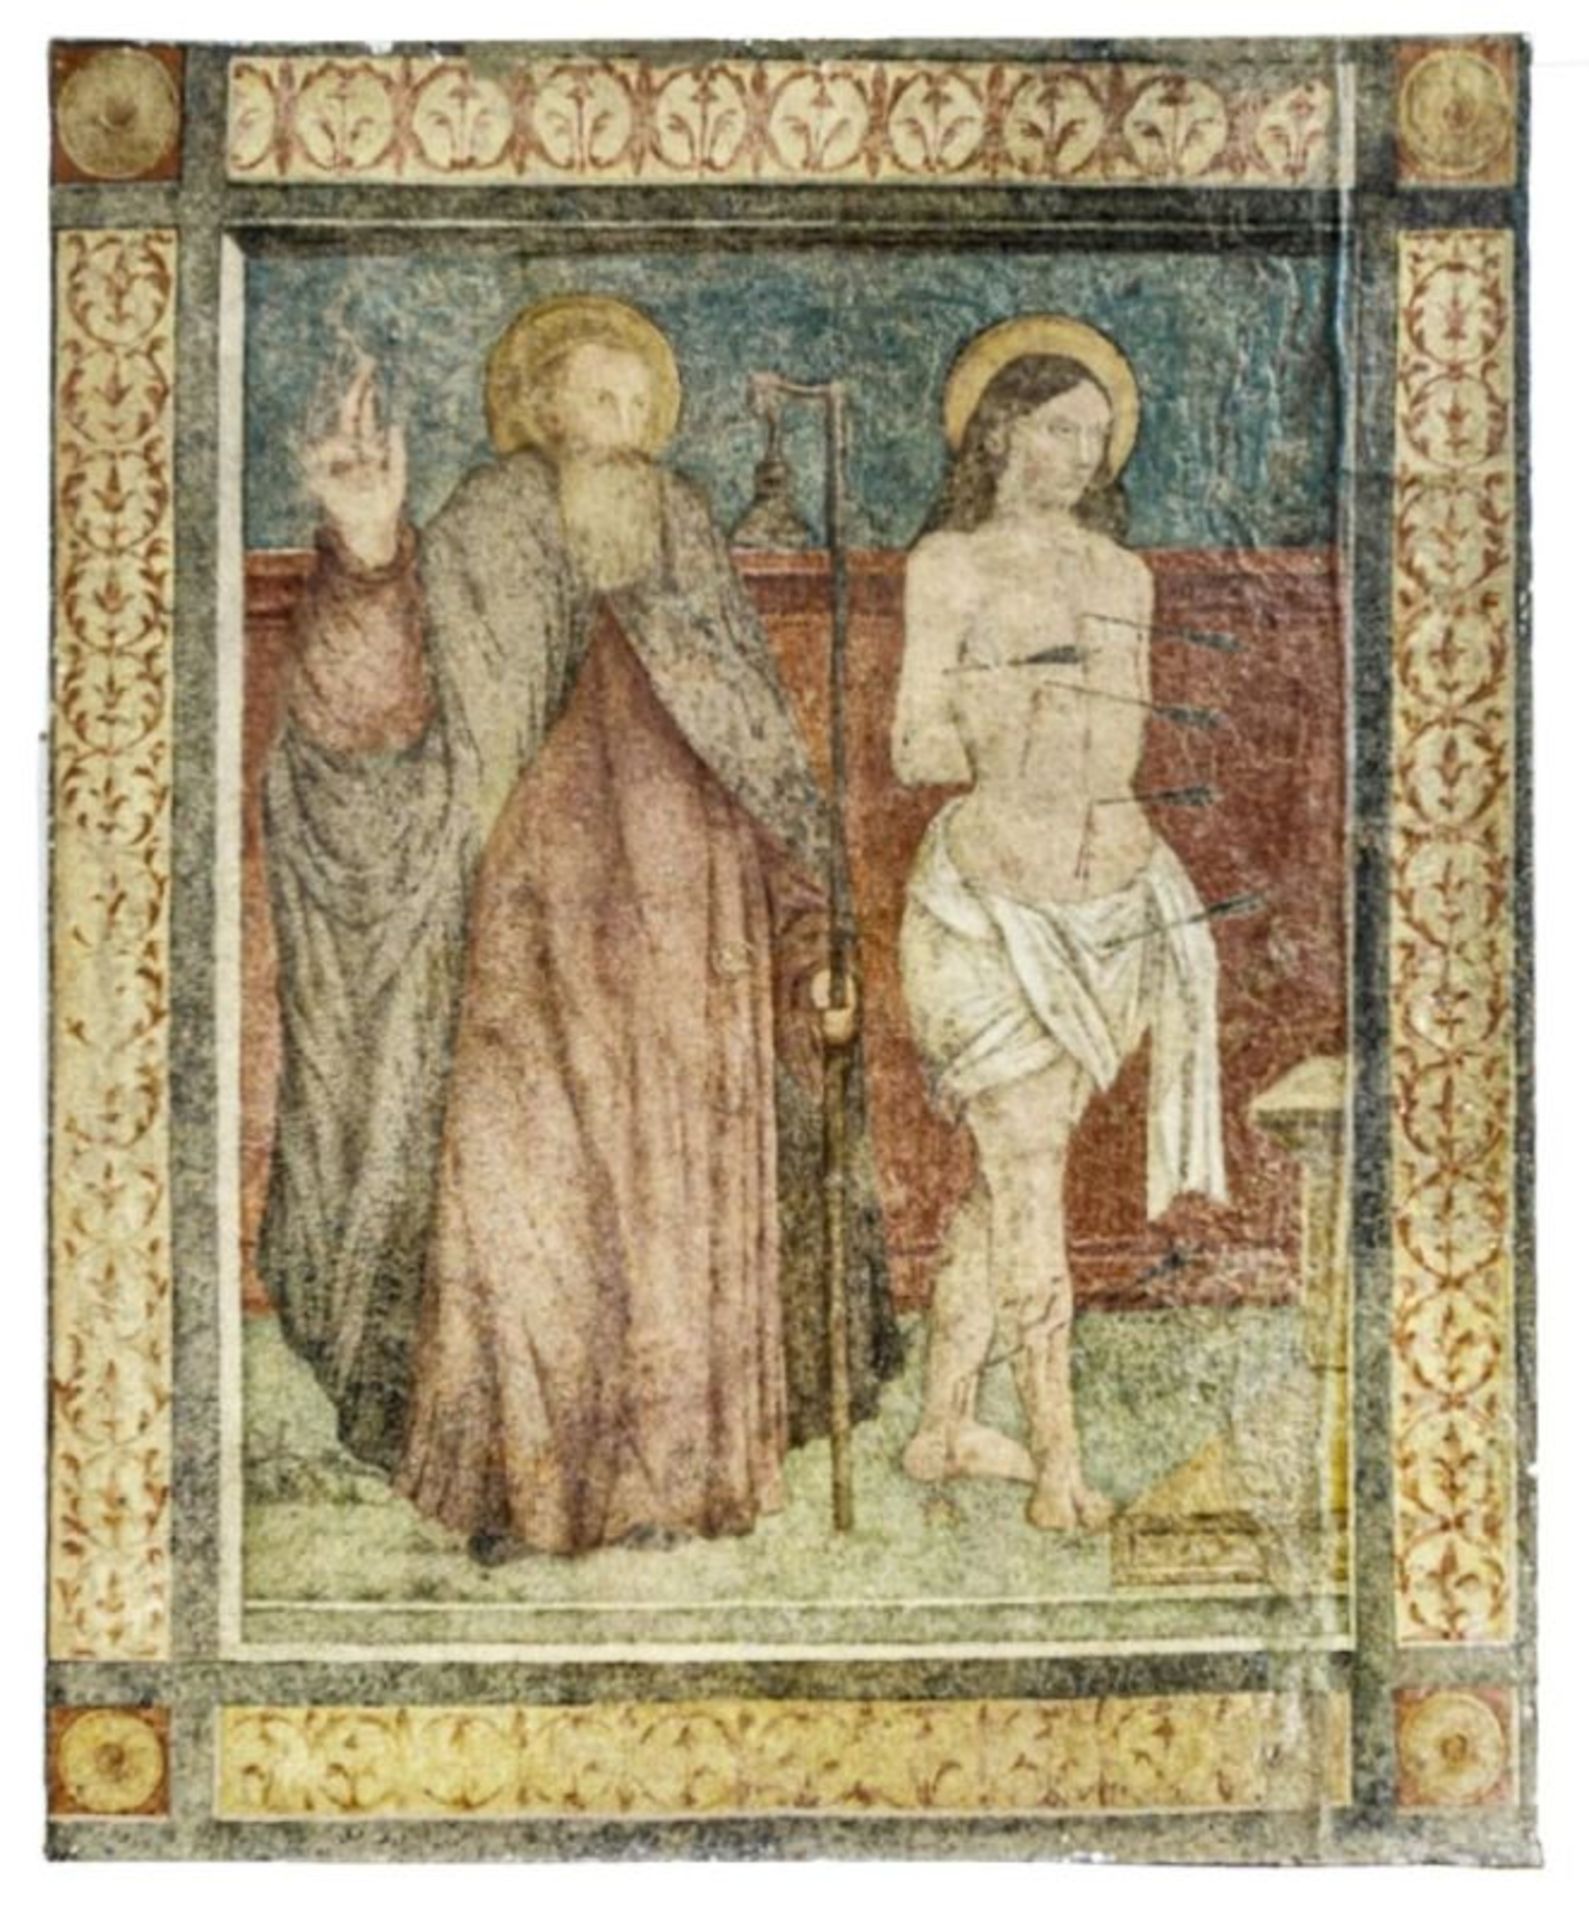 Die heiligen Antonius und Sebastian, Umbrien, 15./16. Jh.